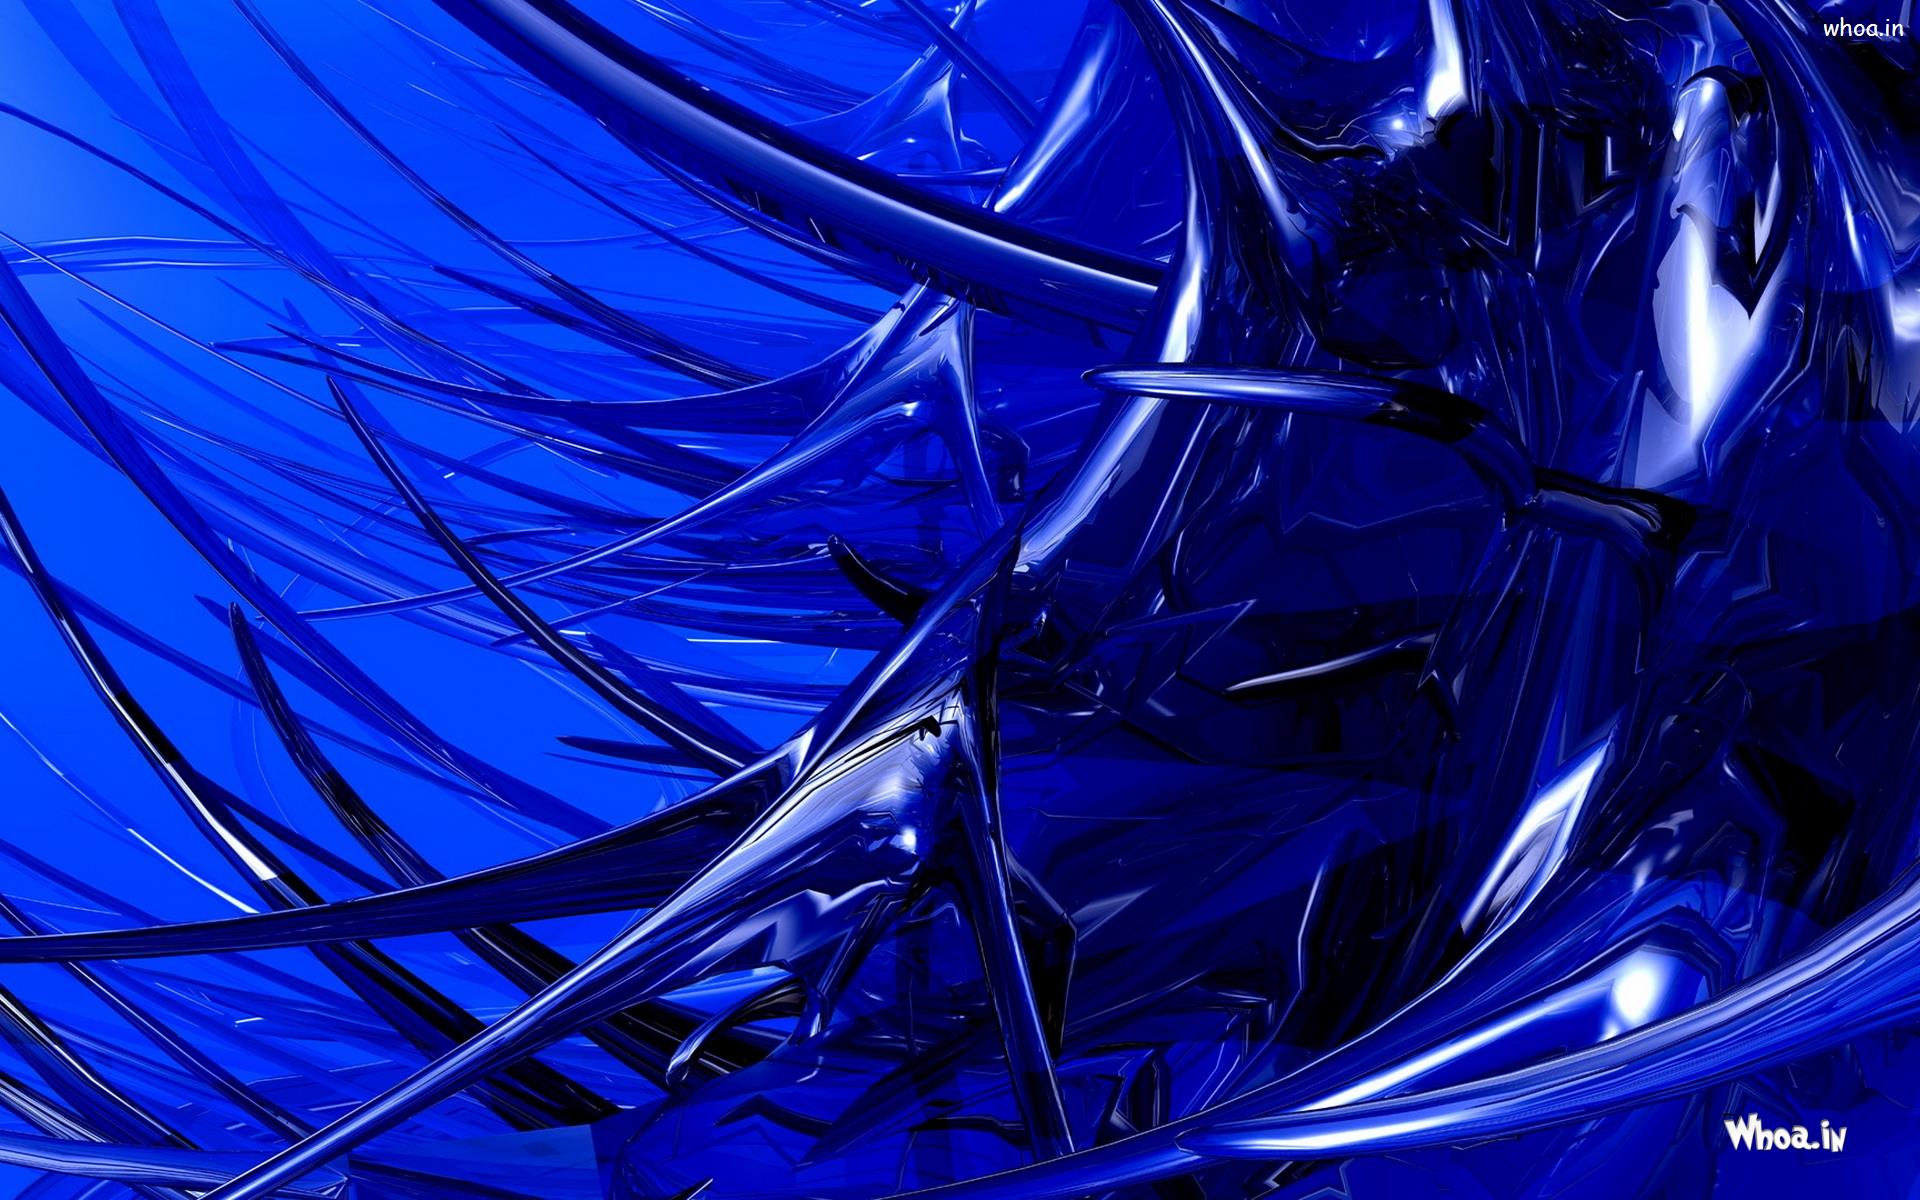 Blue 3D Art Hd Wallpaper Free Download For Desktop